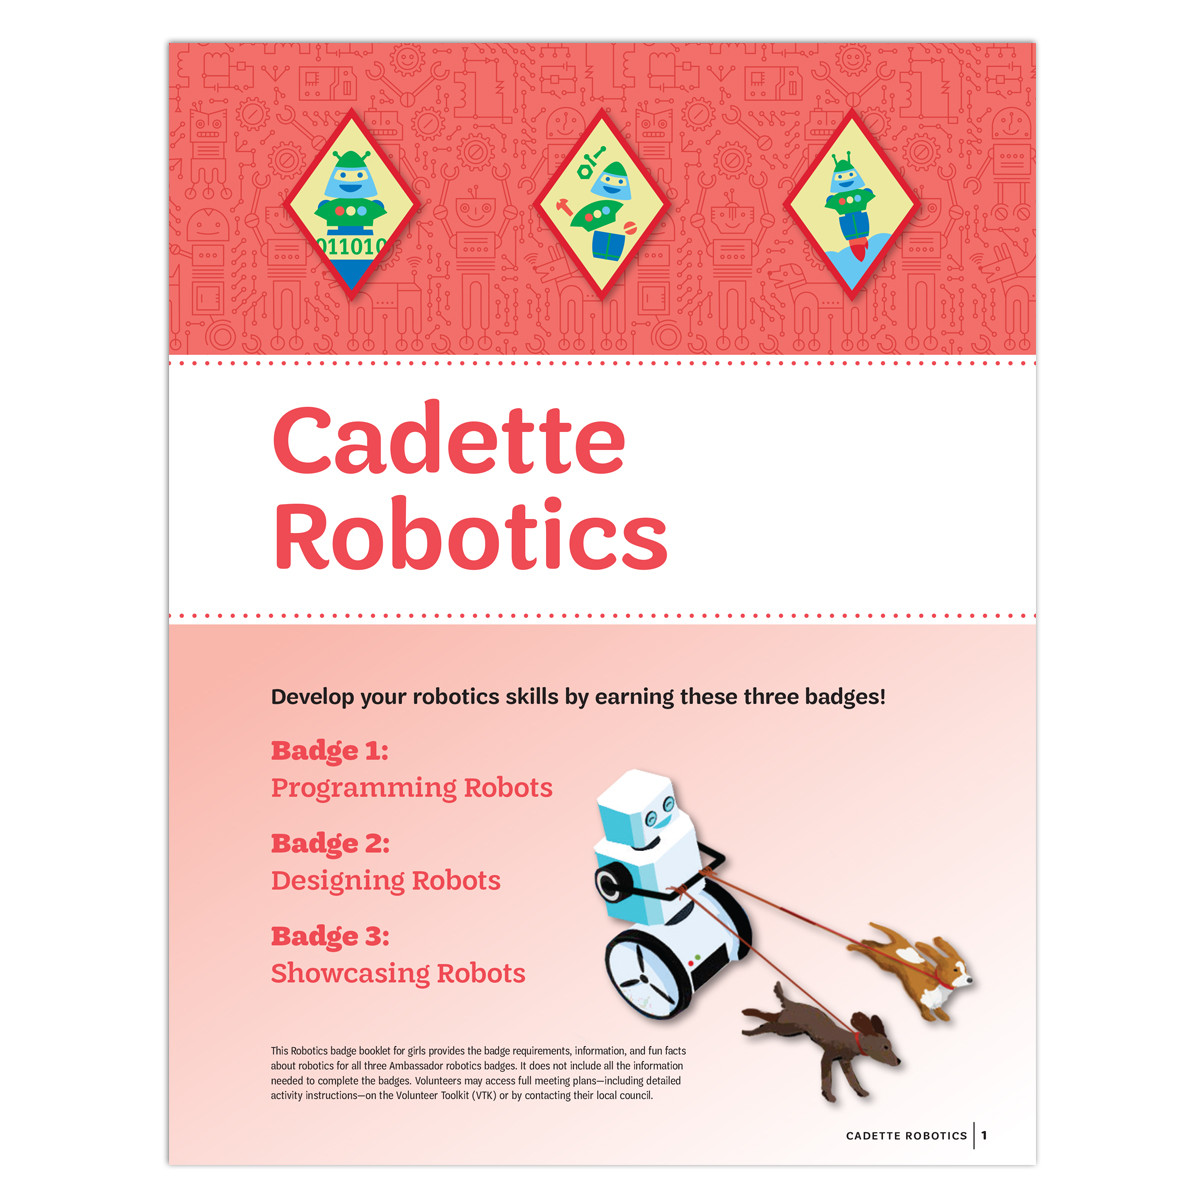 Cadette Robotics Image.jpg